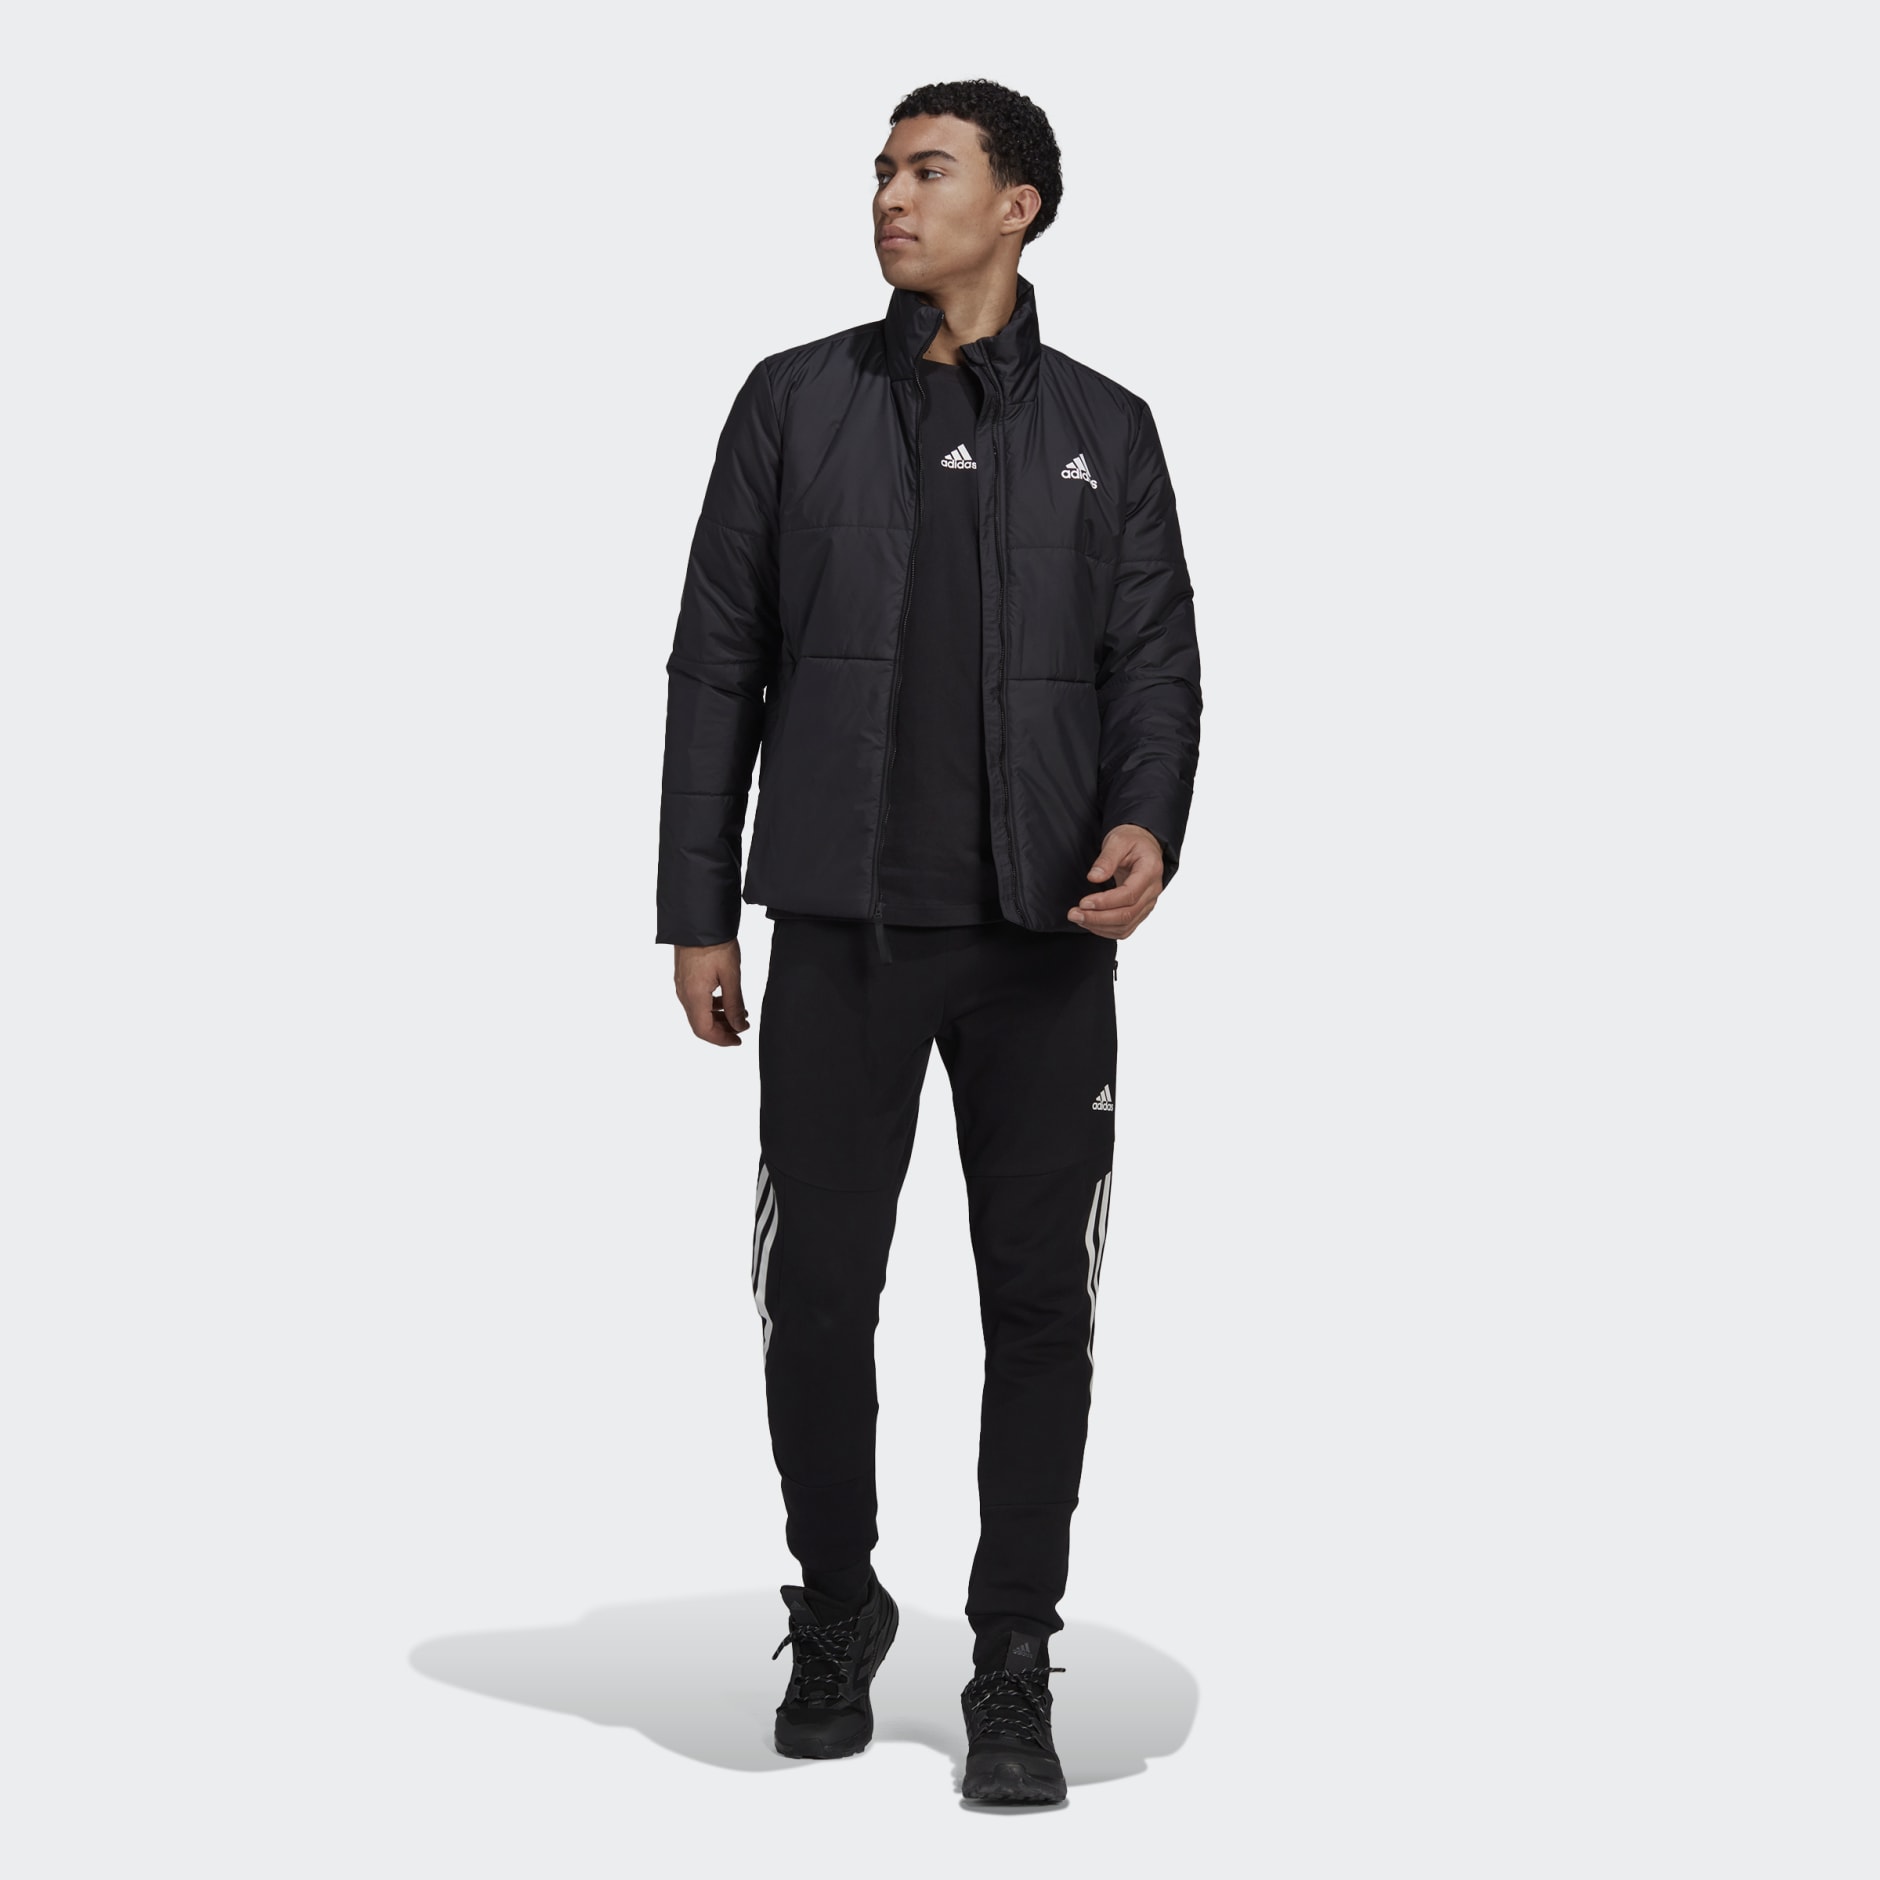 adidas BSC 3-Stripes Insulated - Black GH Jacket adidas 